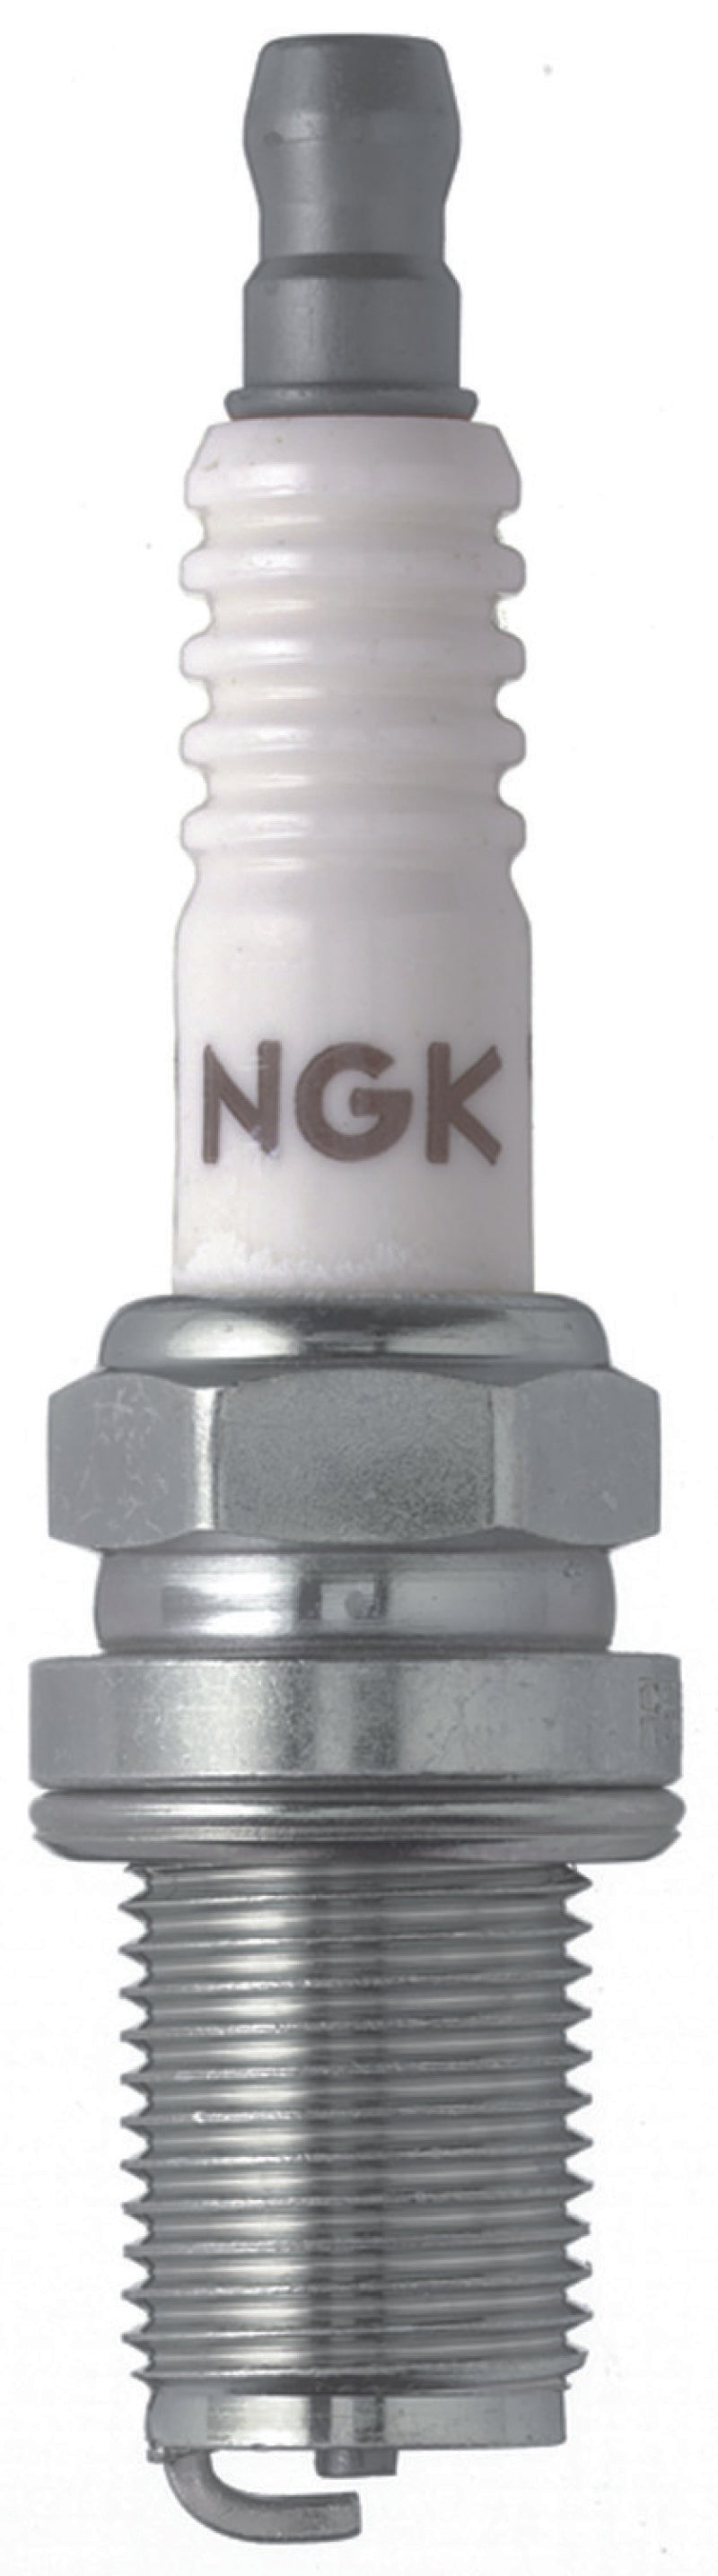 NGK Racing Spark Plug Box of 4 (R6601-10) -  Shop now at Performance Car Parts